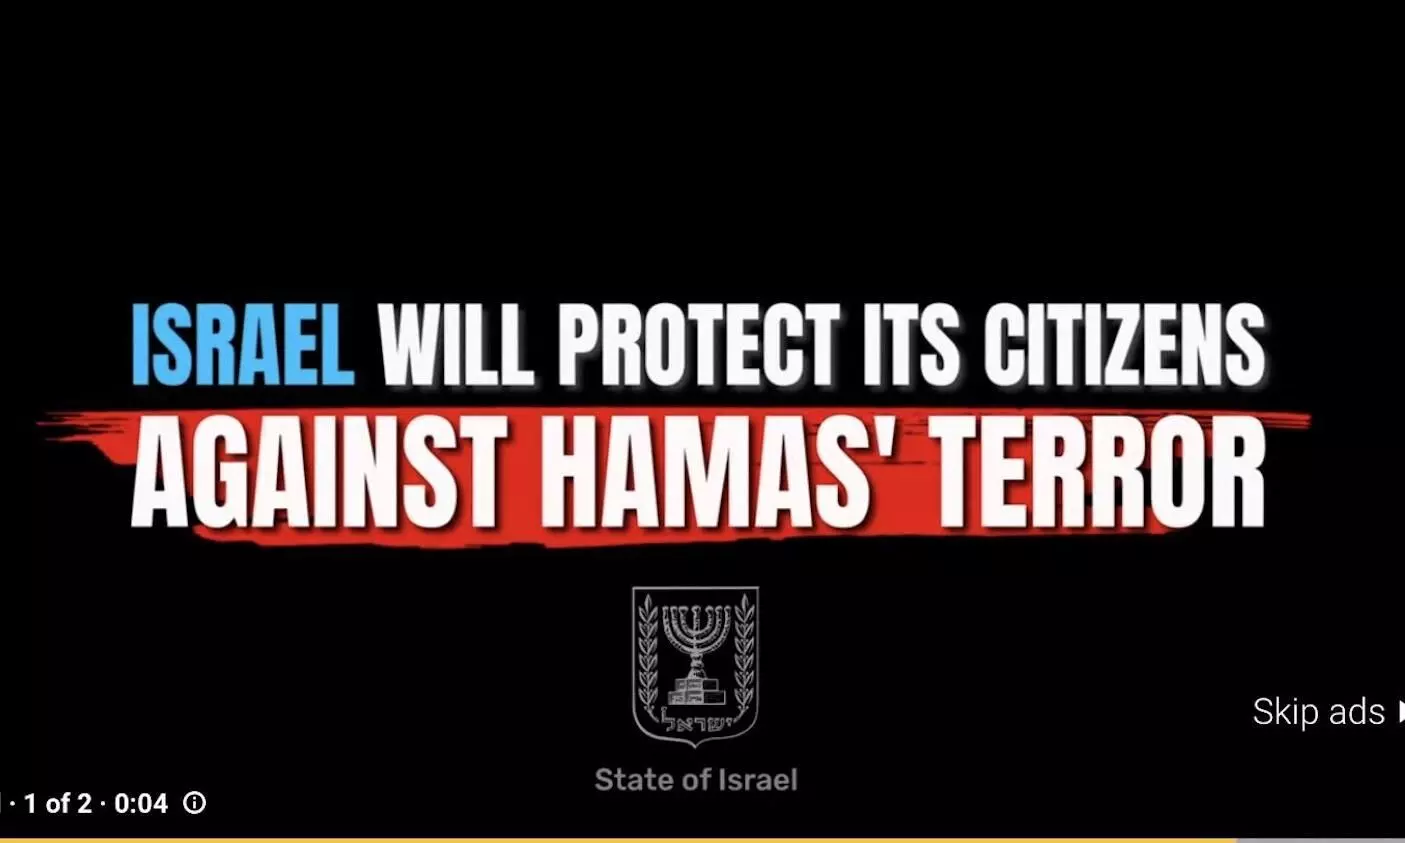 Israel’s YouTube ad seeks support against Hamas, critics say it is propaganda